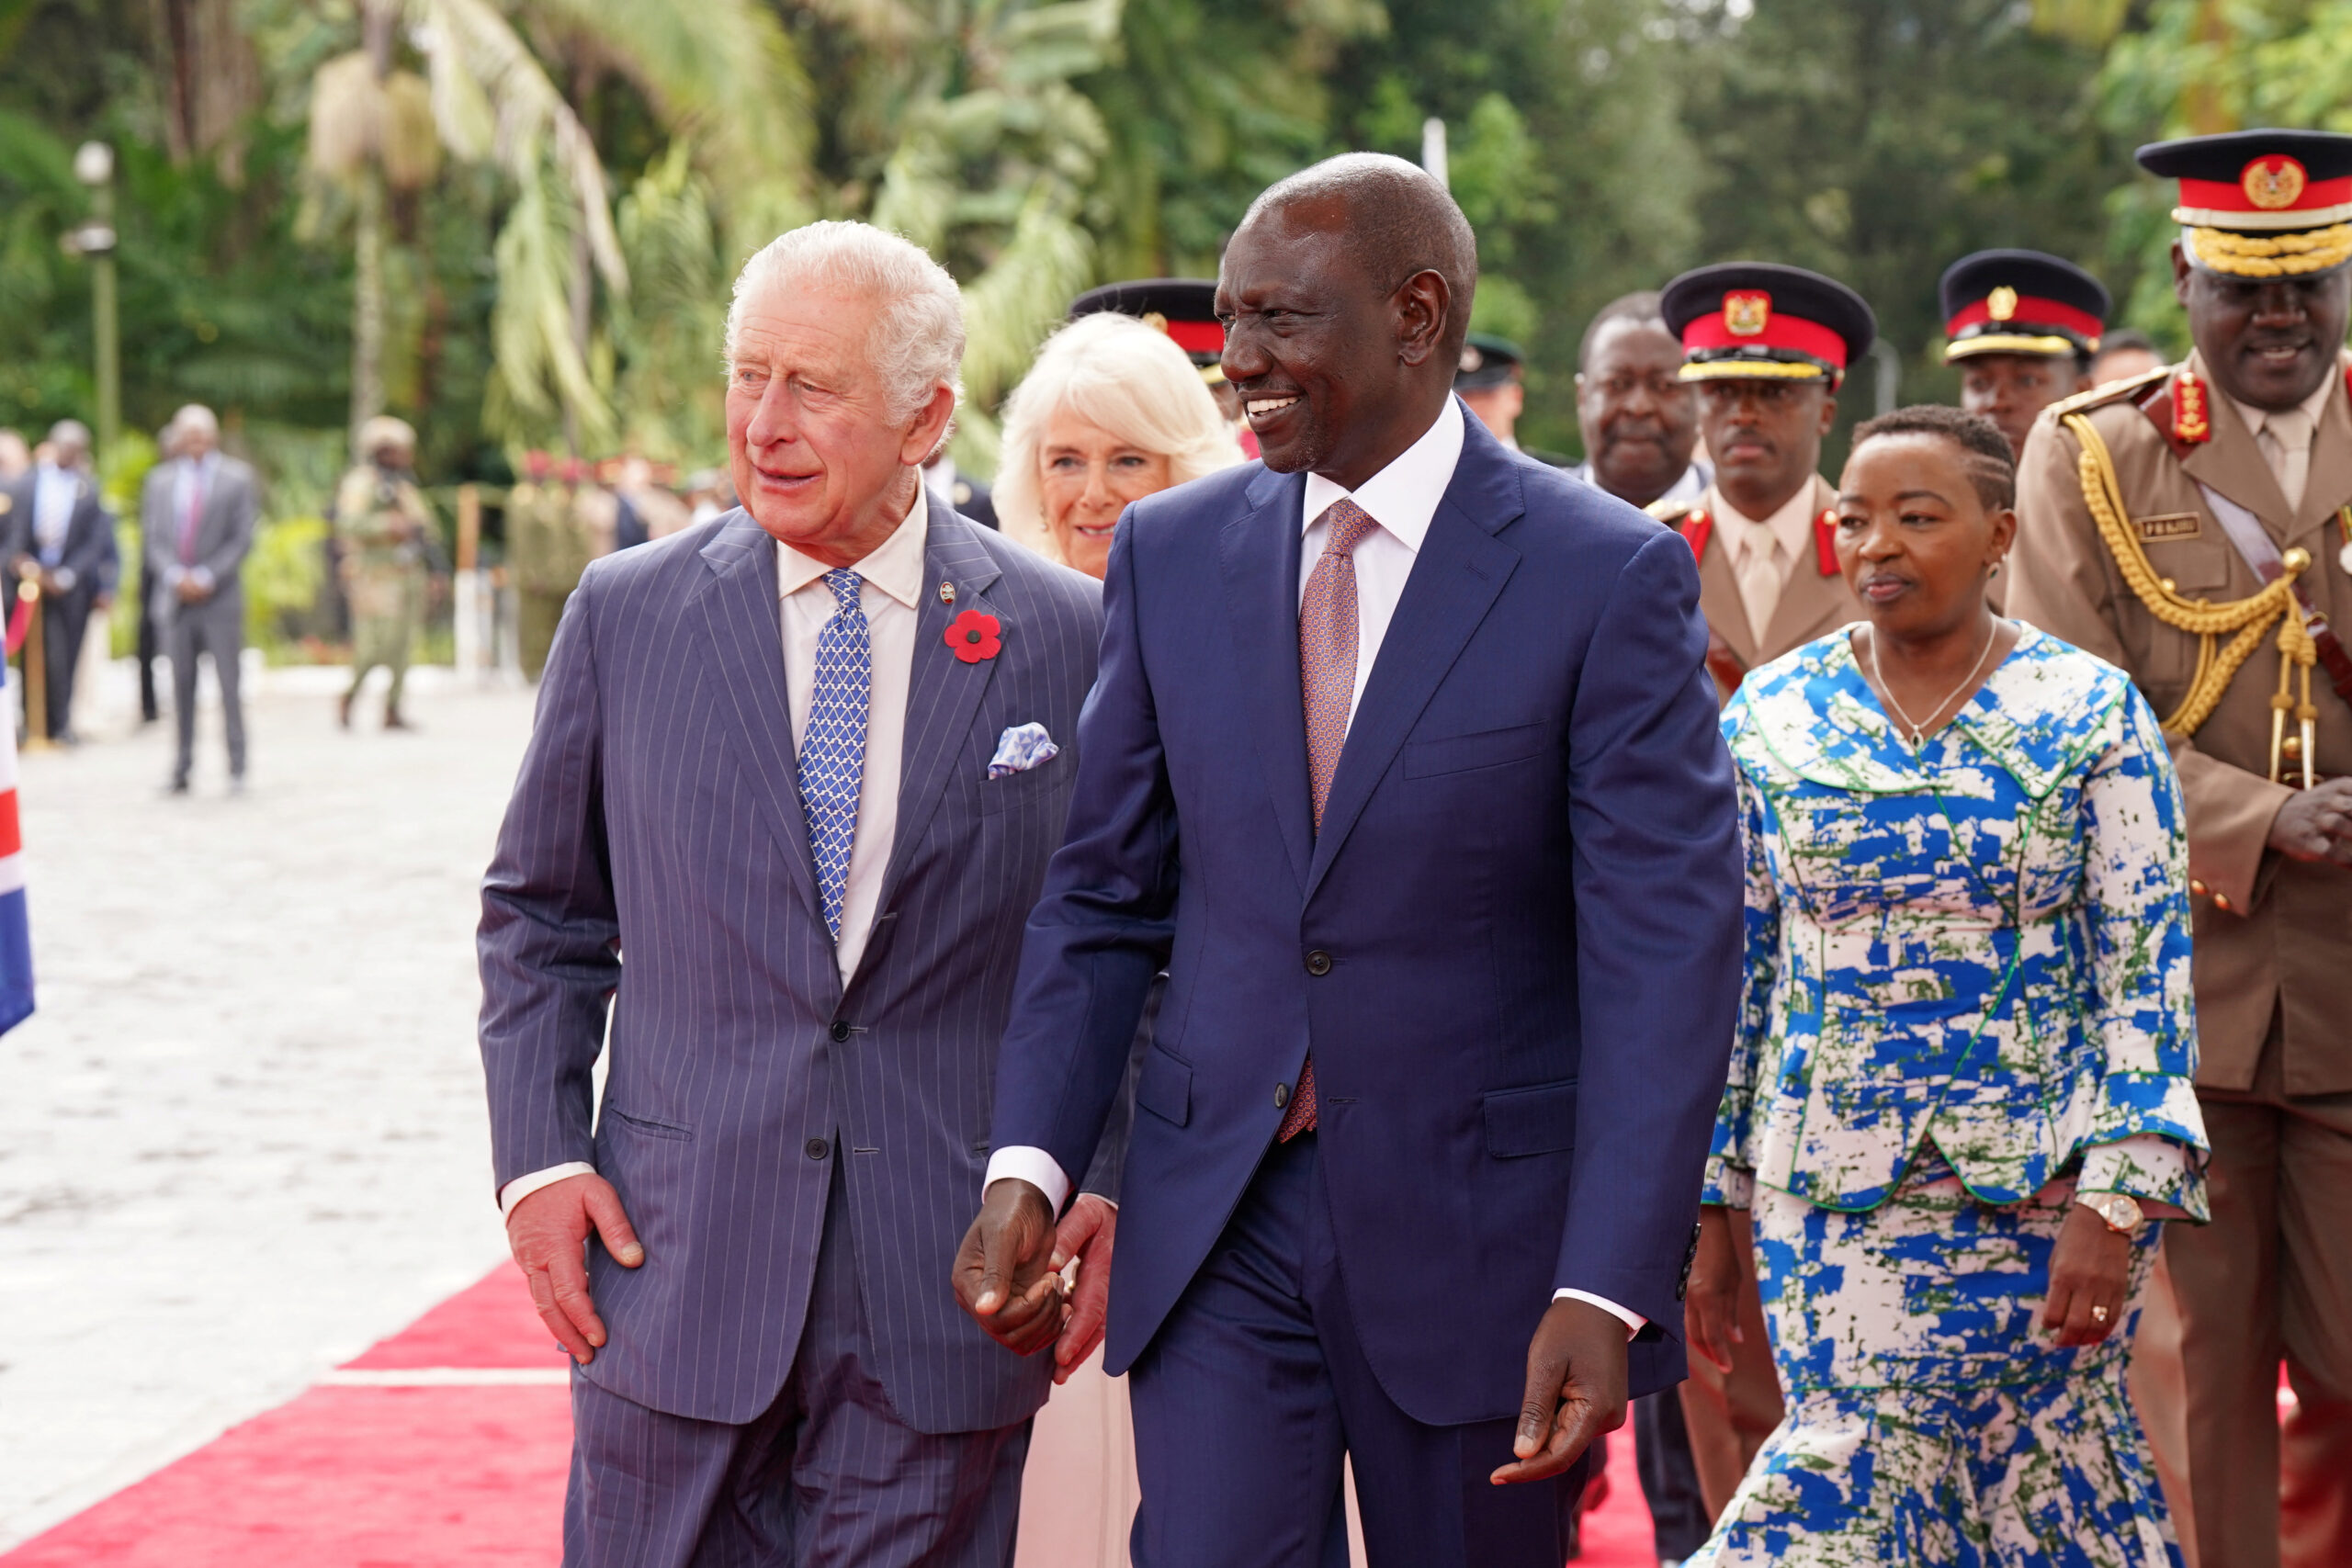 King Charles Continues Kenya Visit After Admitting Colonial Abuses